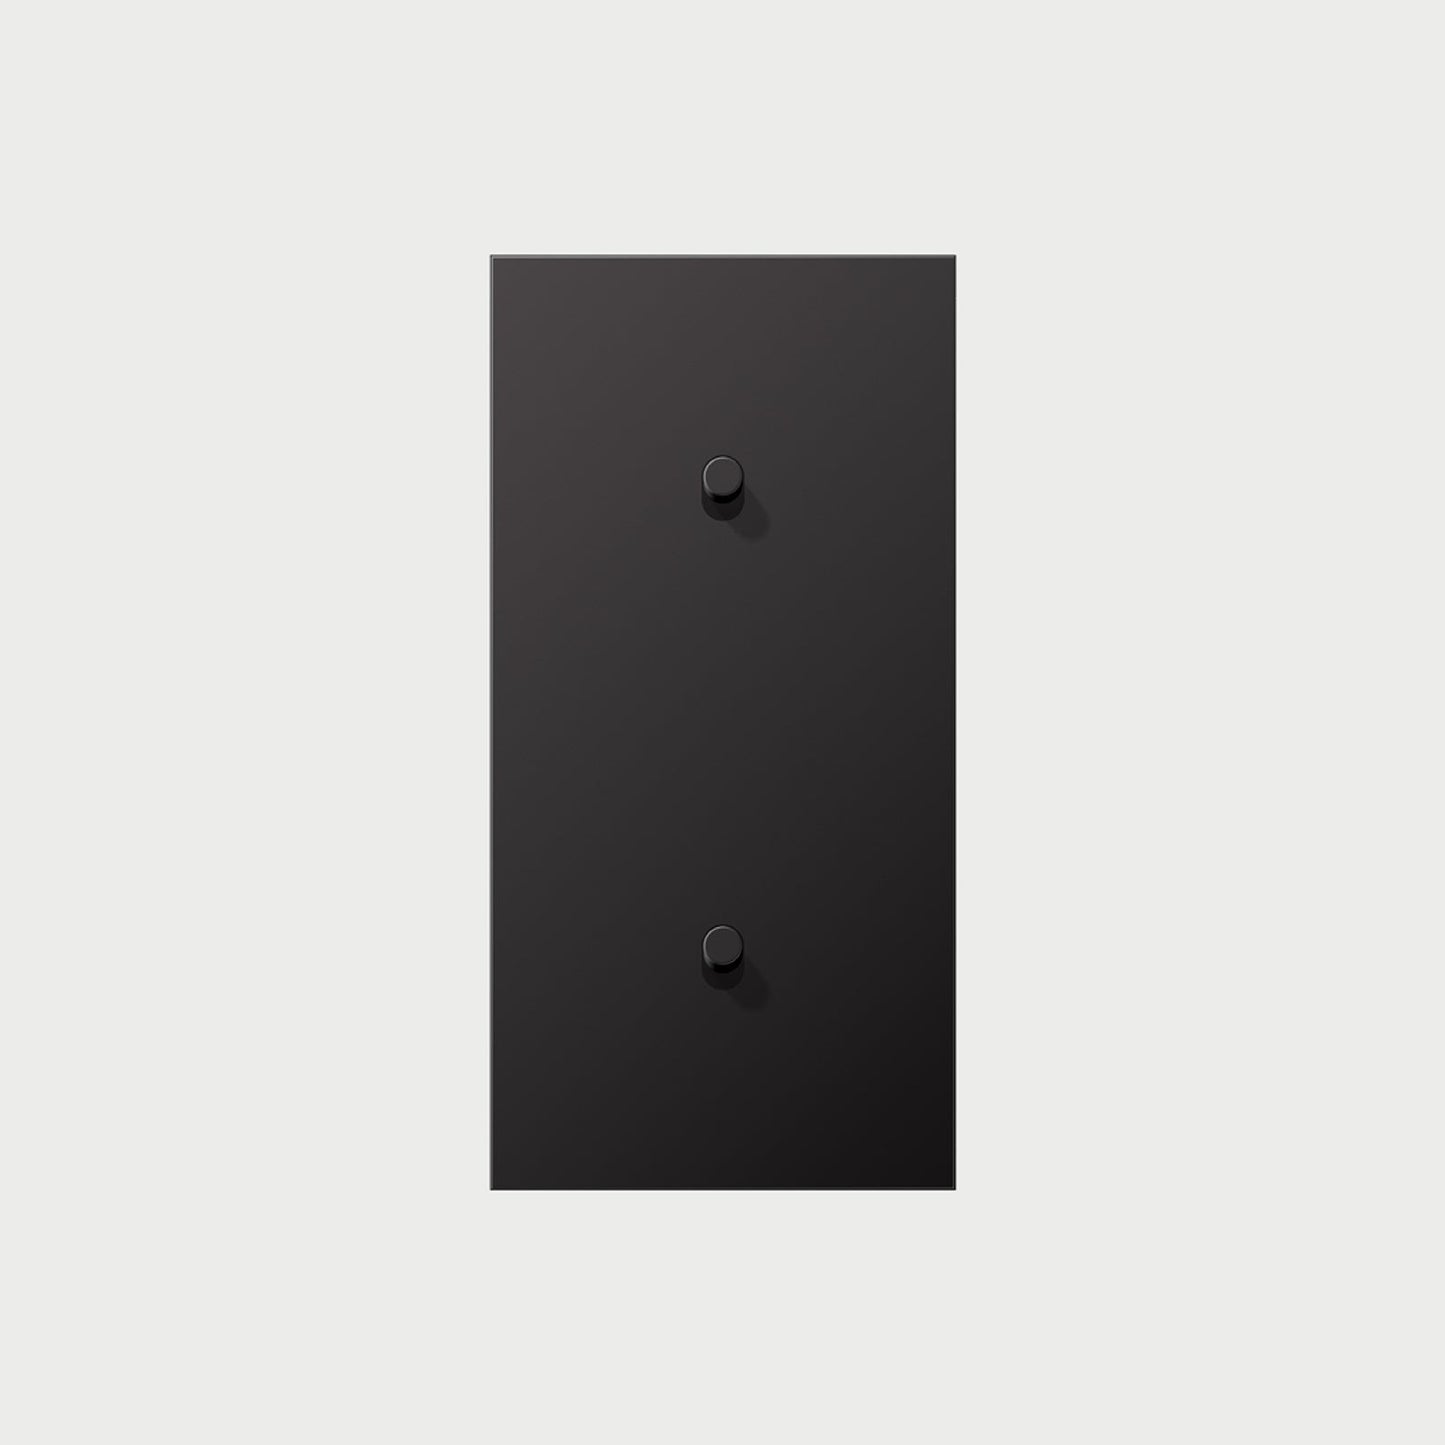 2 X 1 Toggle Vertical Dark Aluminium / Way Cover